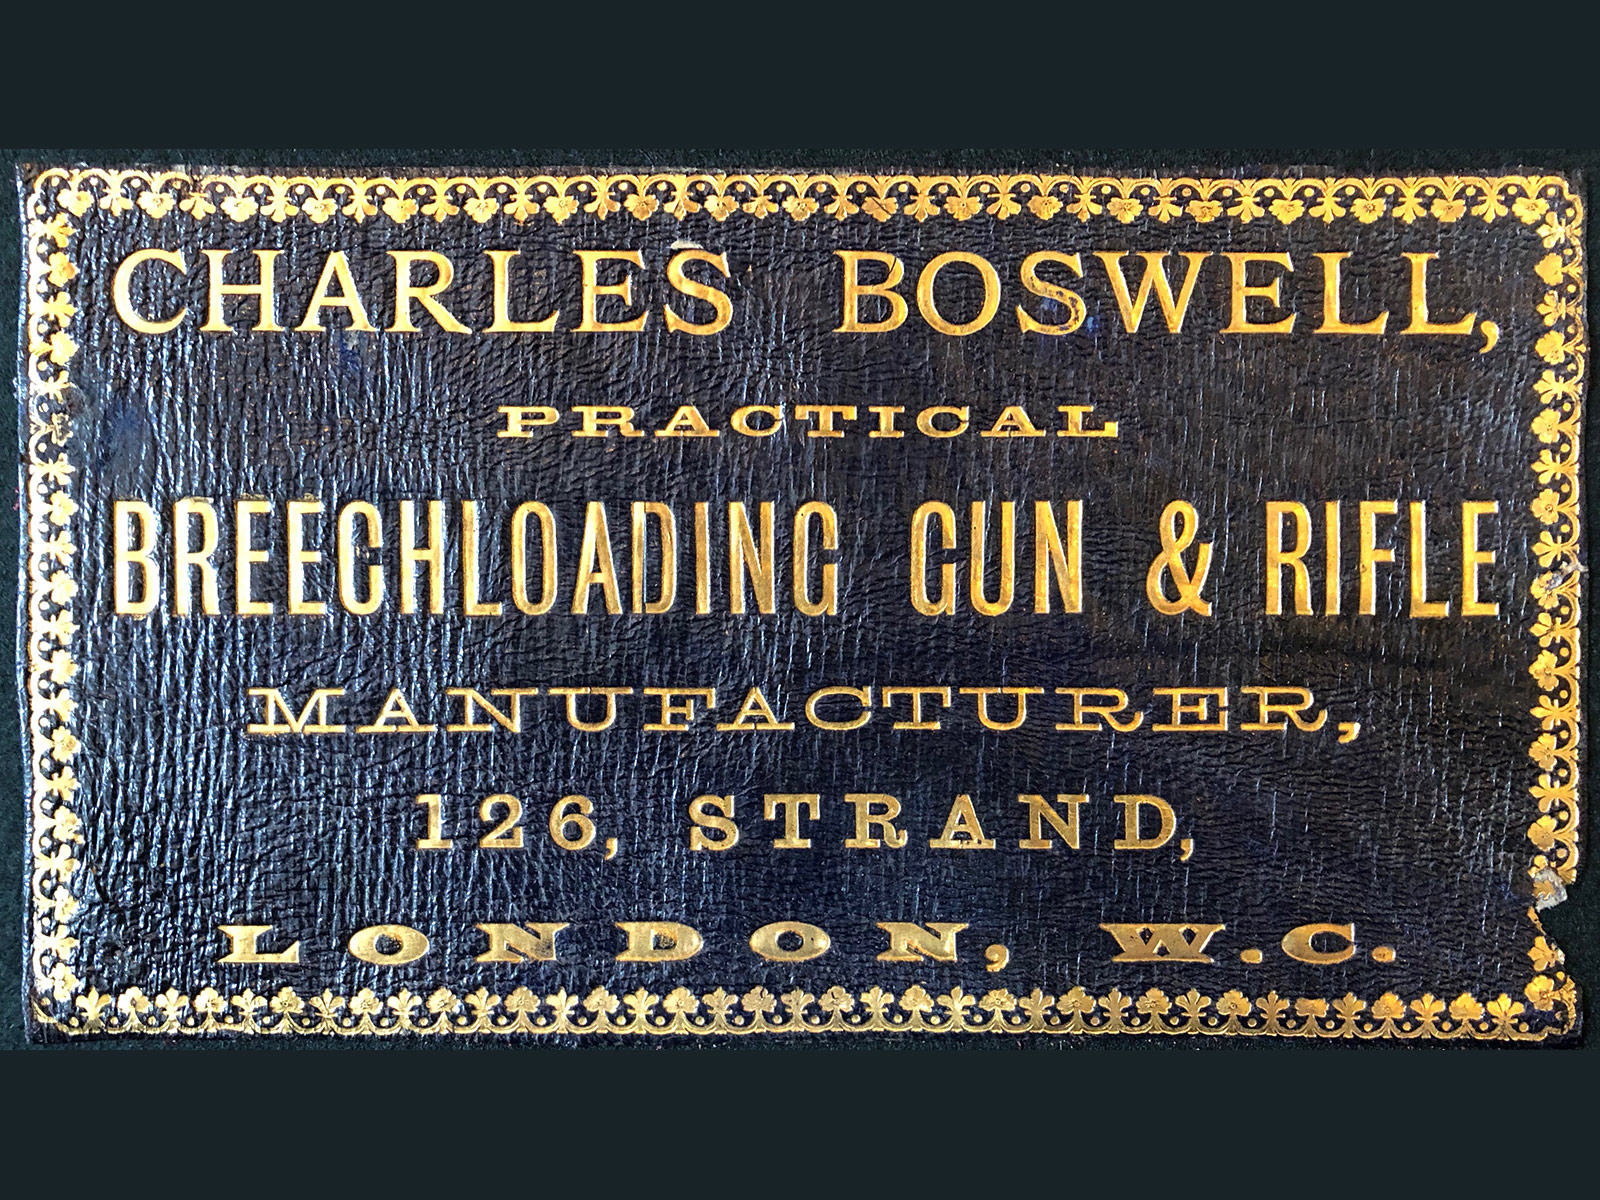 Clive & Stowe Gunmaker Paper Gun Case Label  Accessories Gun Maker 